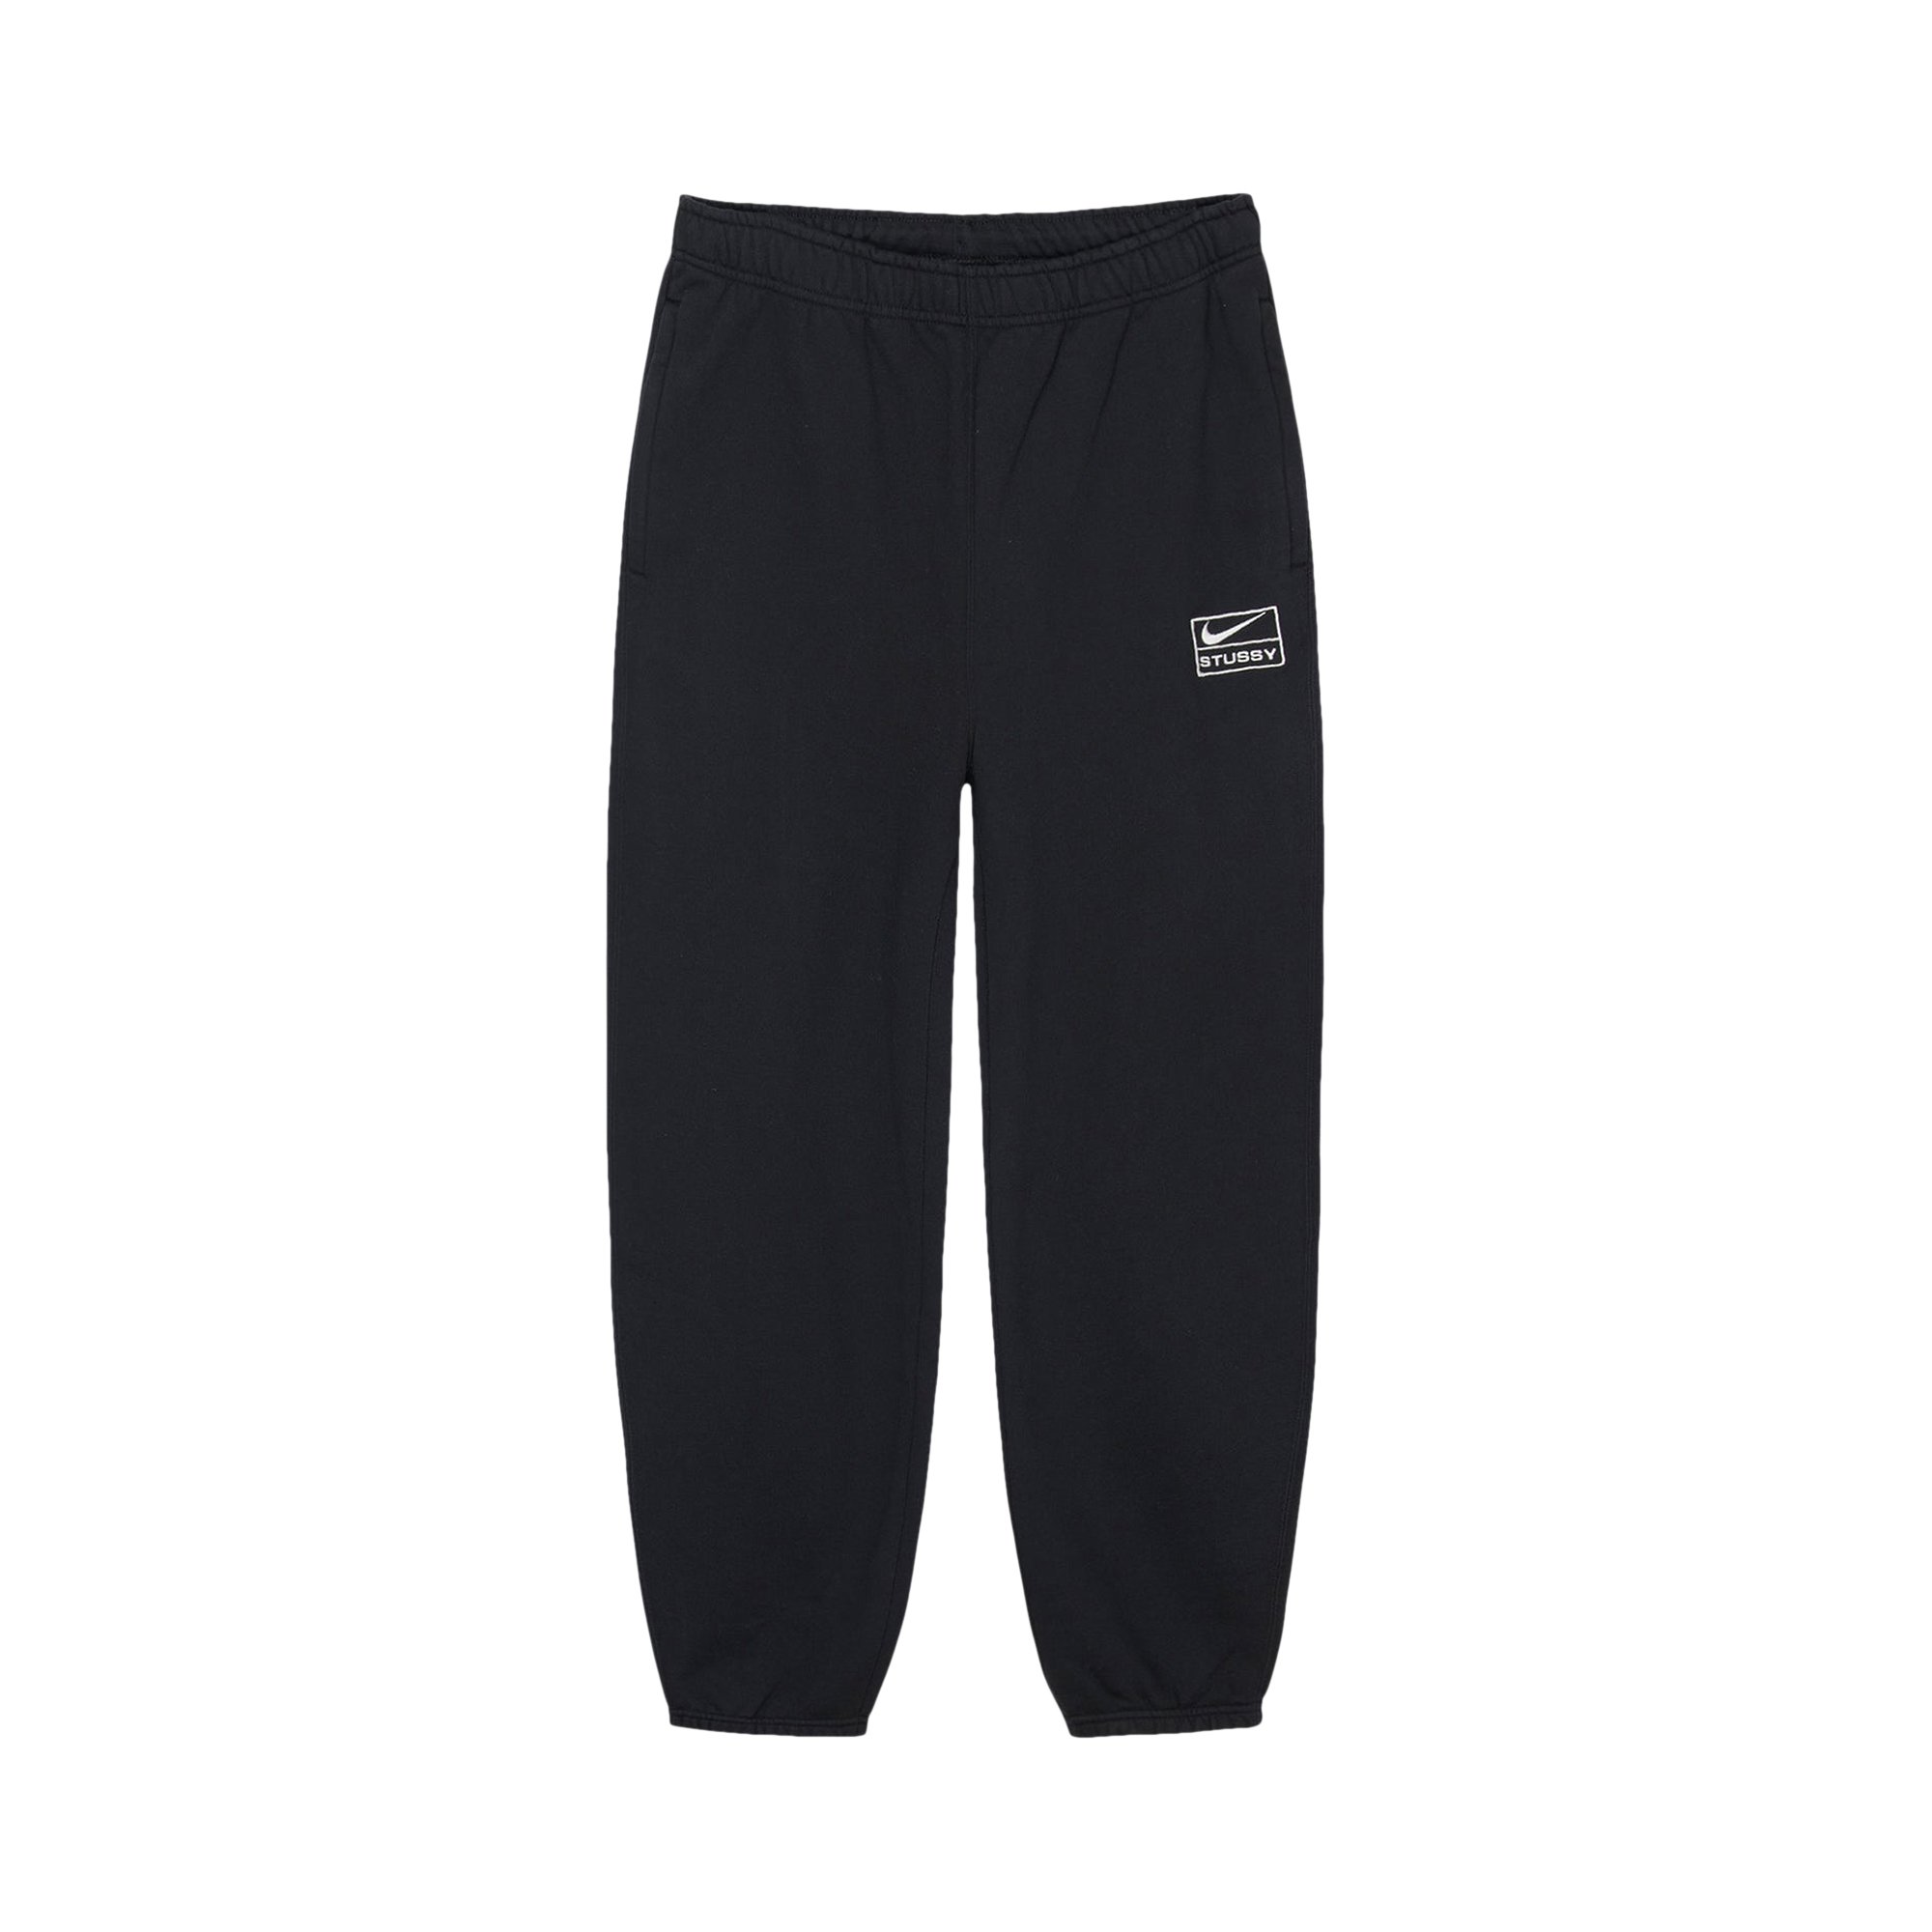 Nike x Stussy International Sweatpants Black S/S 21